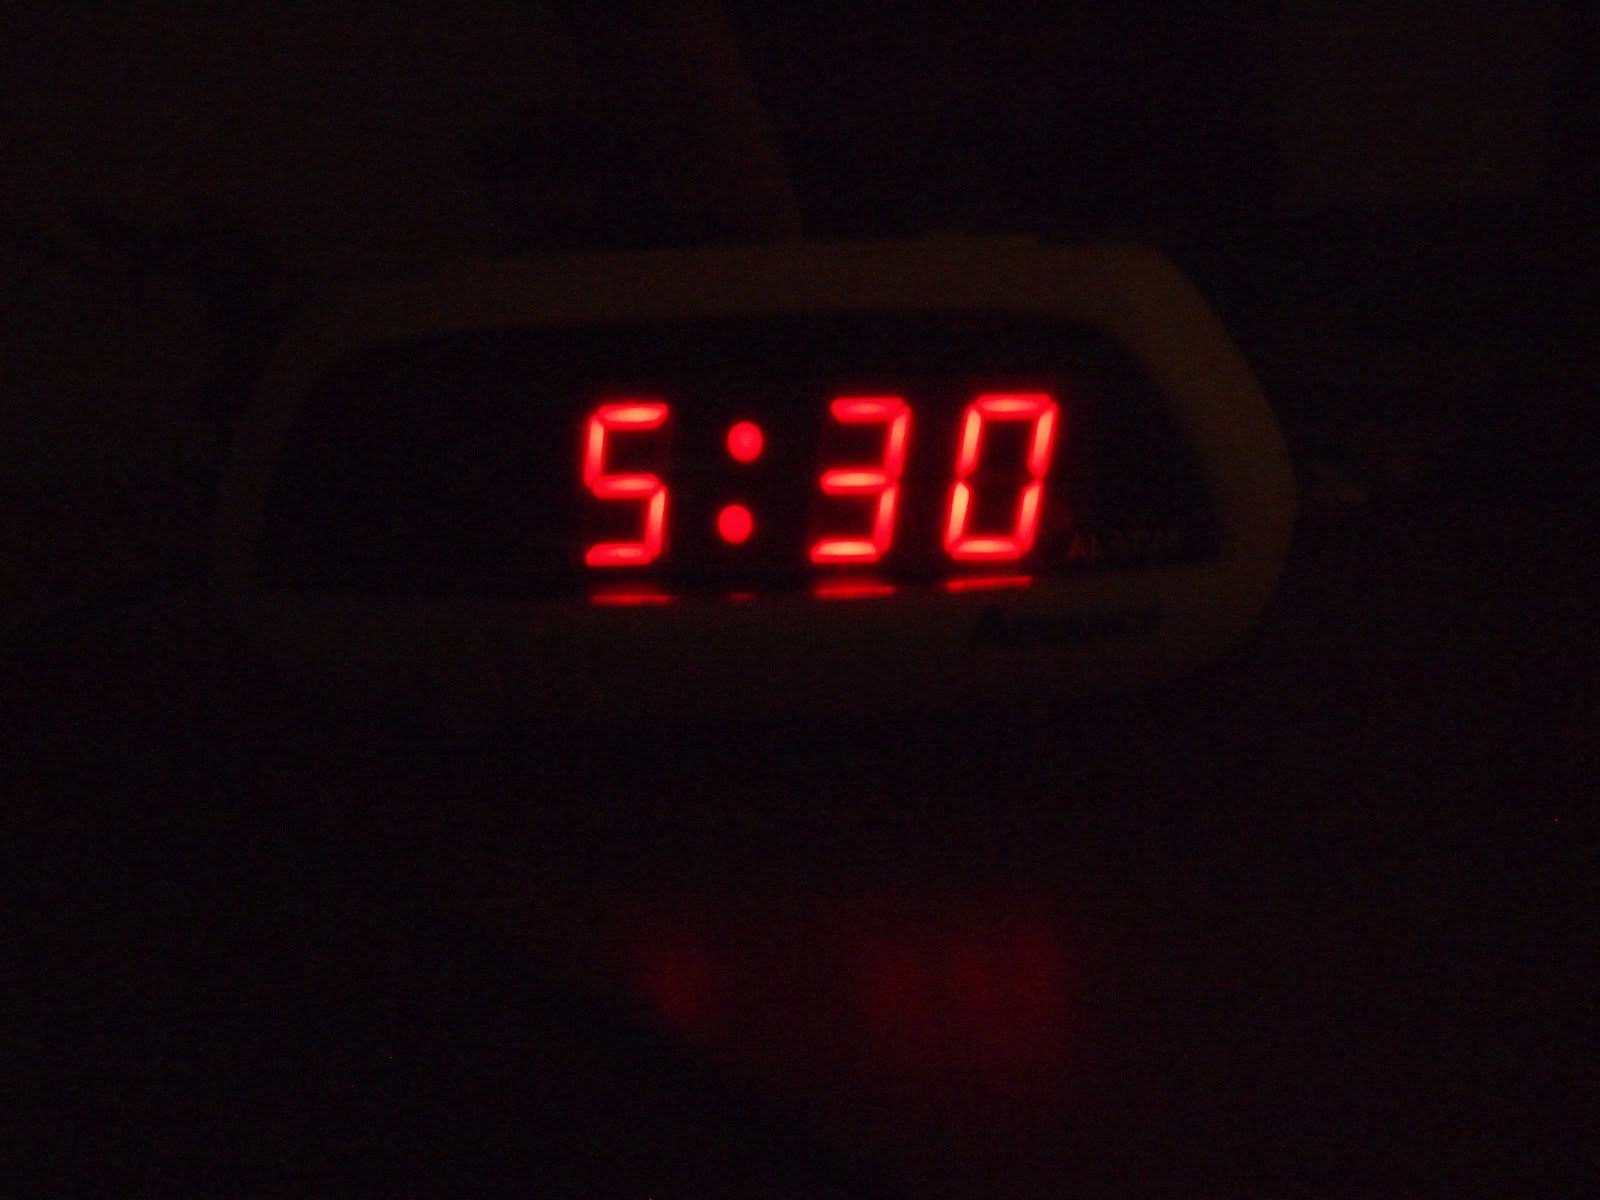 Электронные часы шесть утра